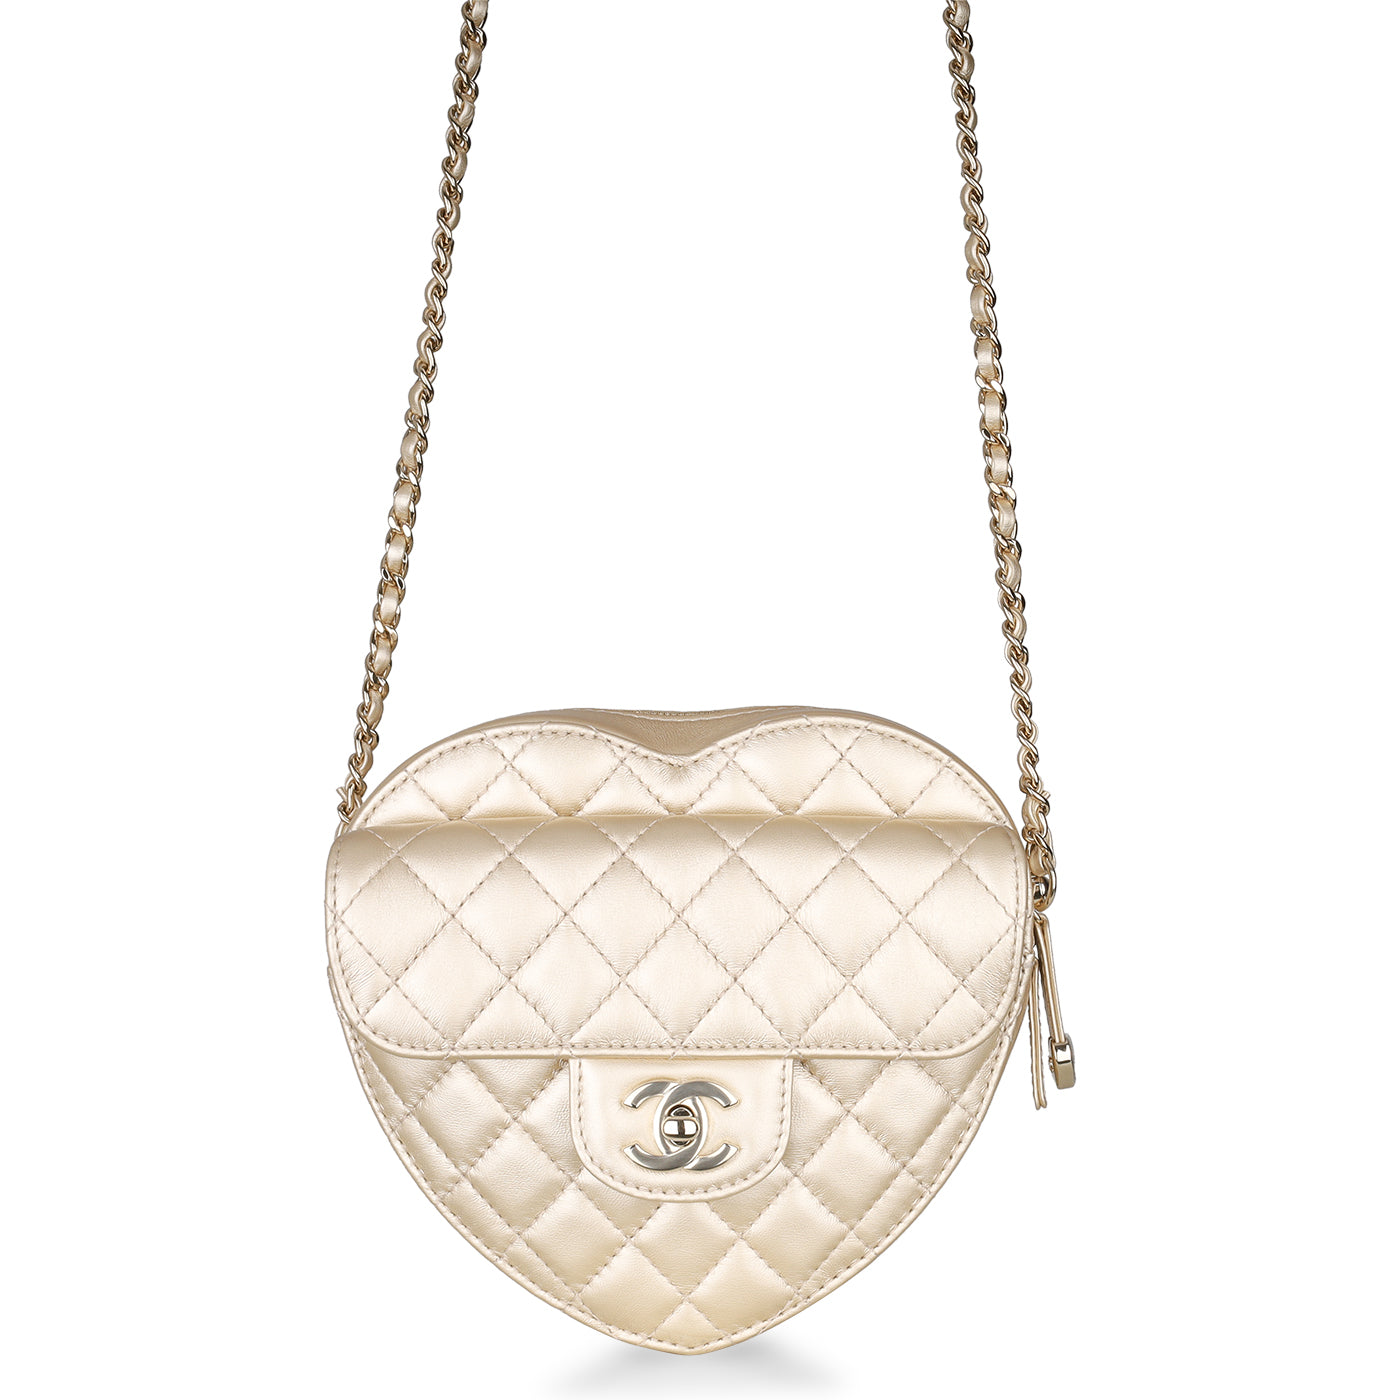 Chanel - Heart Bag - Champagne Lambskin - Brand New